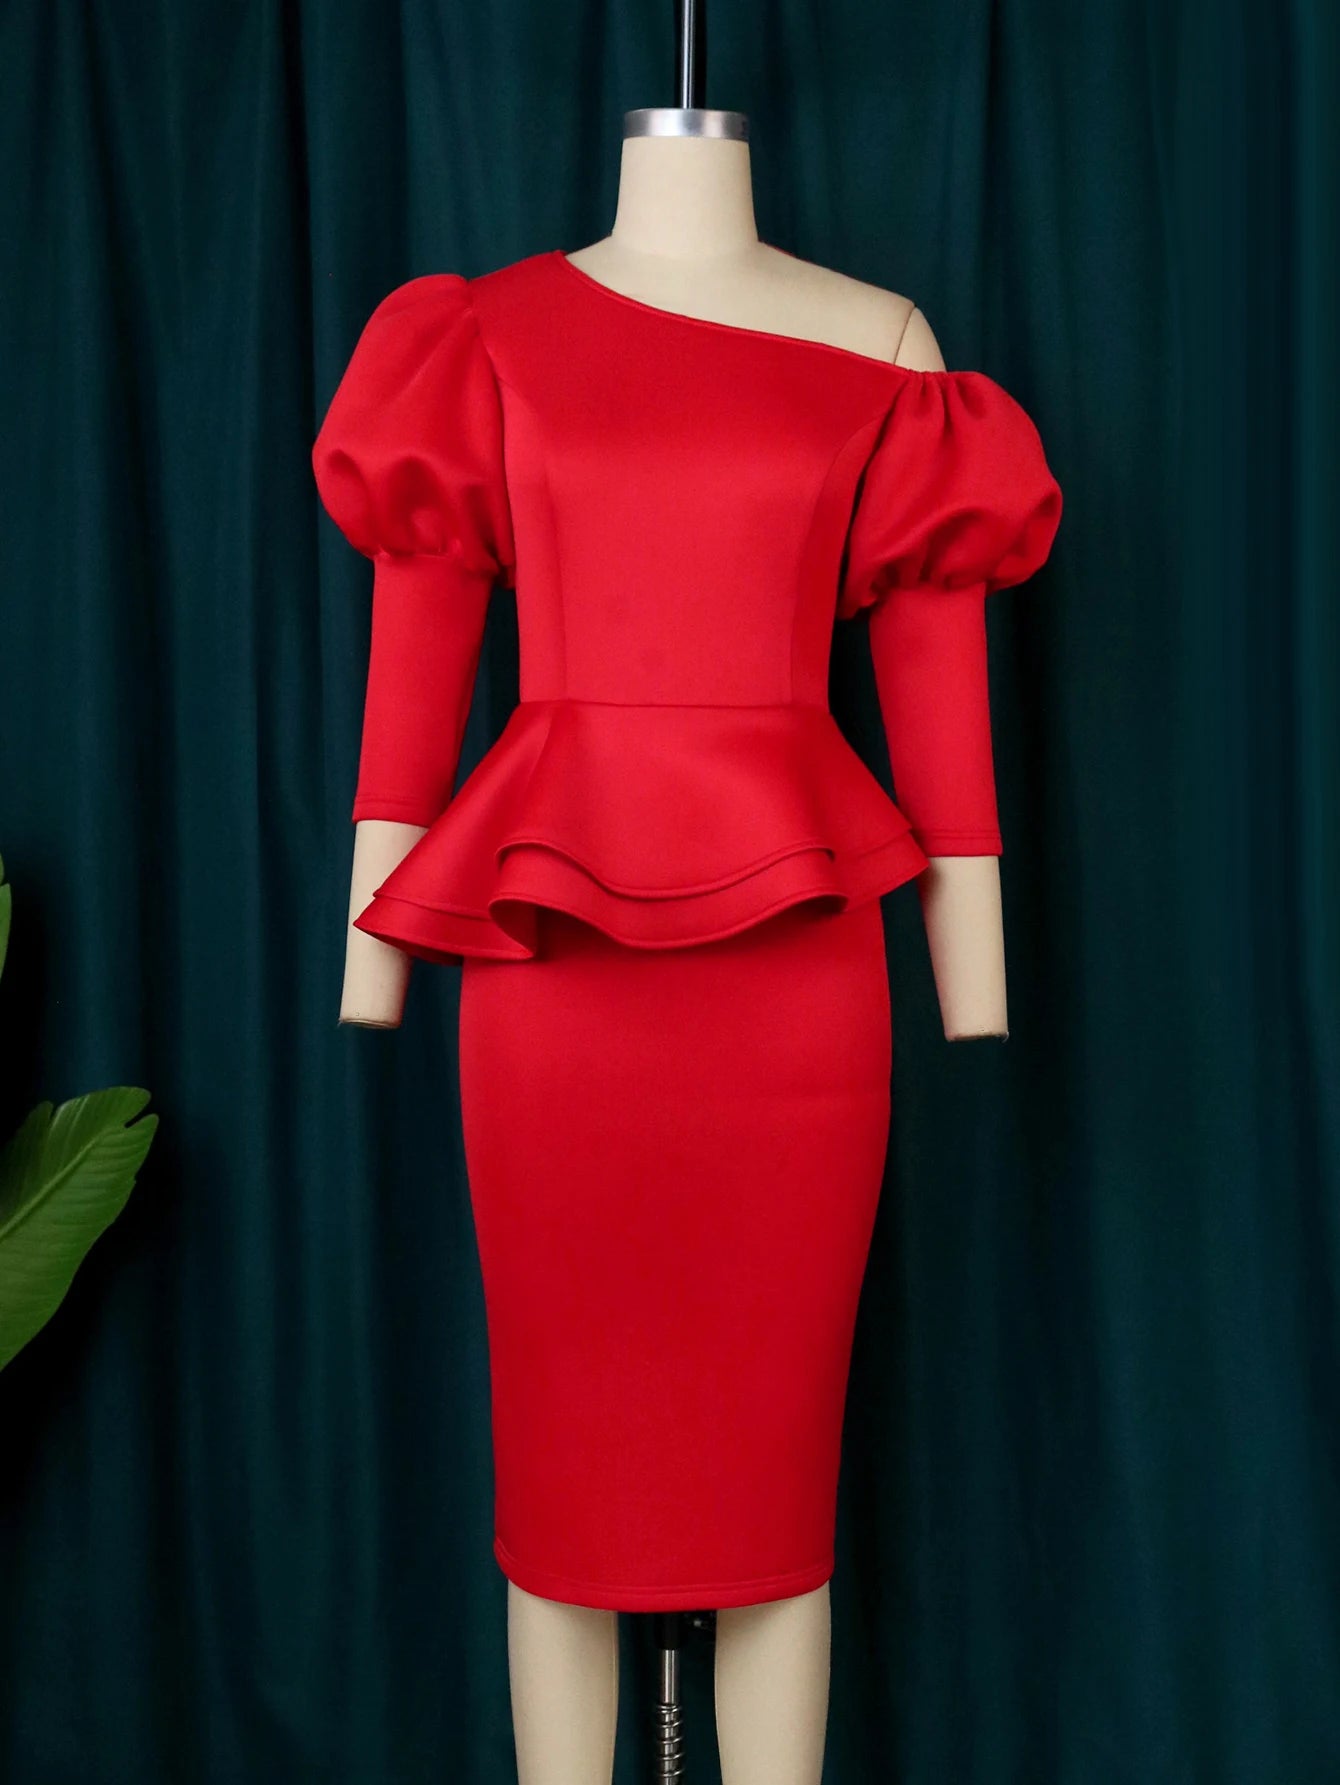 Festive Red Peplum Bodycon Dress for Women - Elegant Off-Shoulder African Style  OurLum.com   